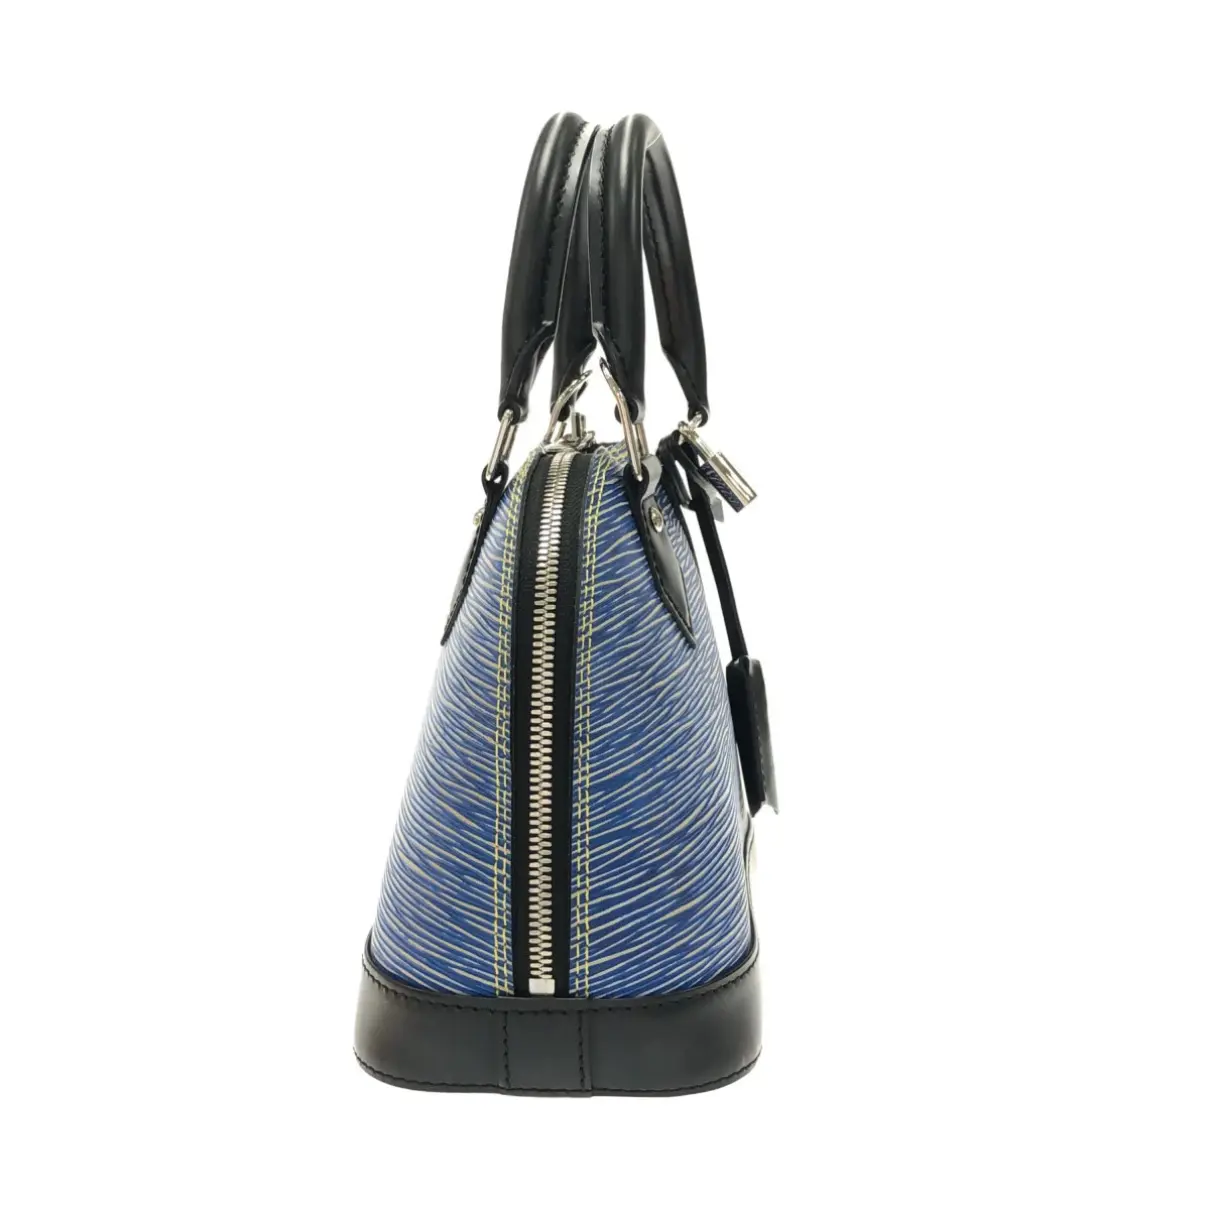 Buy Louis Vuitton Alma BB leather handbag online